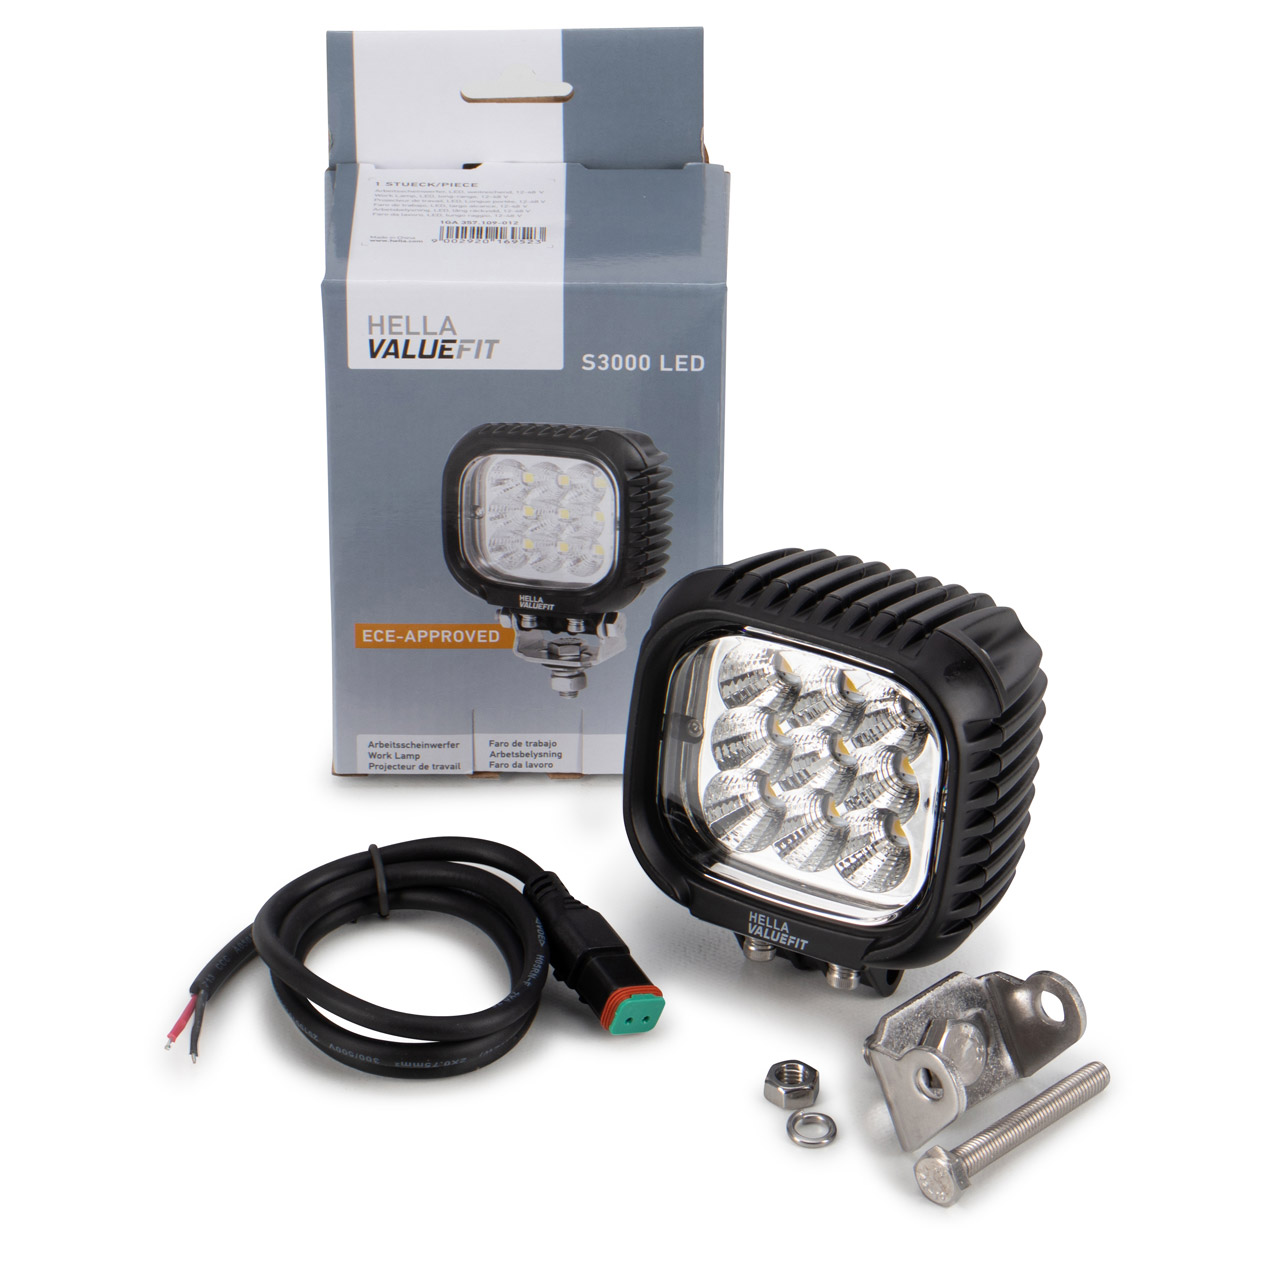 Hella LED Arbeitsscheinwerfer Light Bar ValueFit / 1000lm